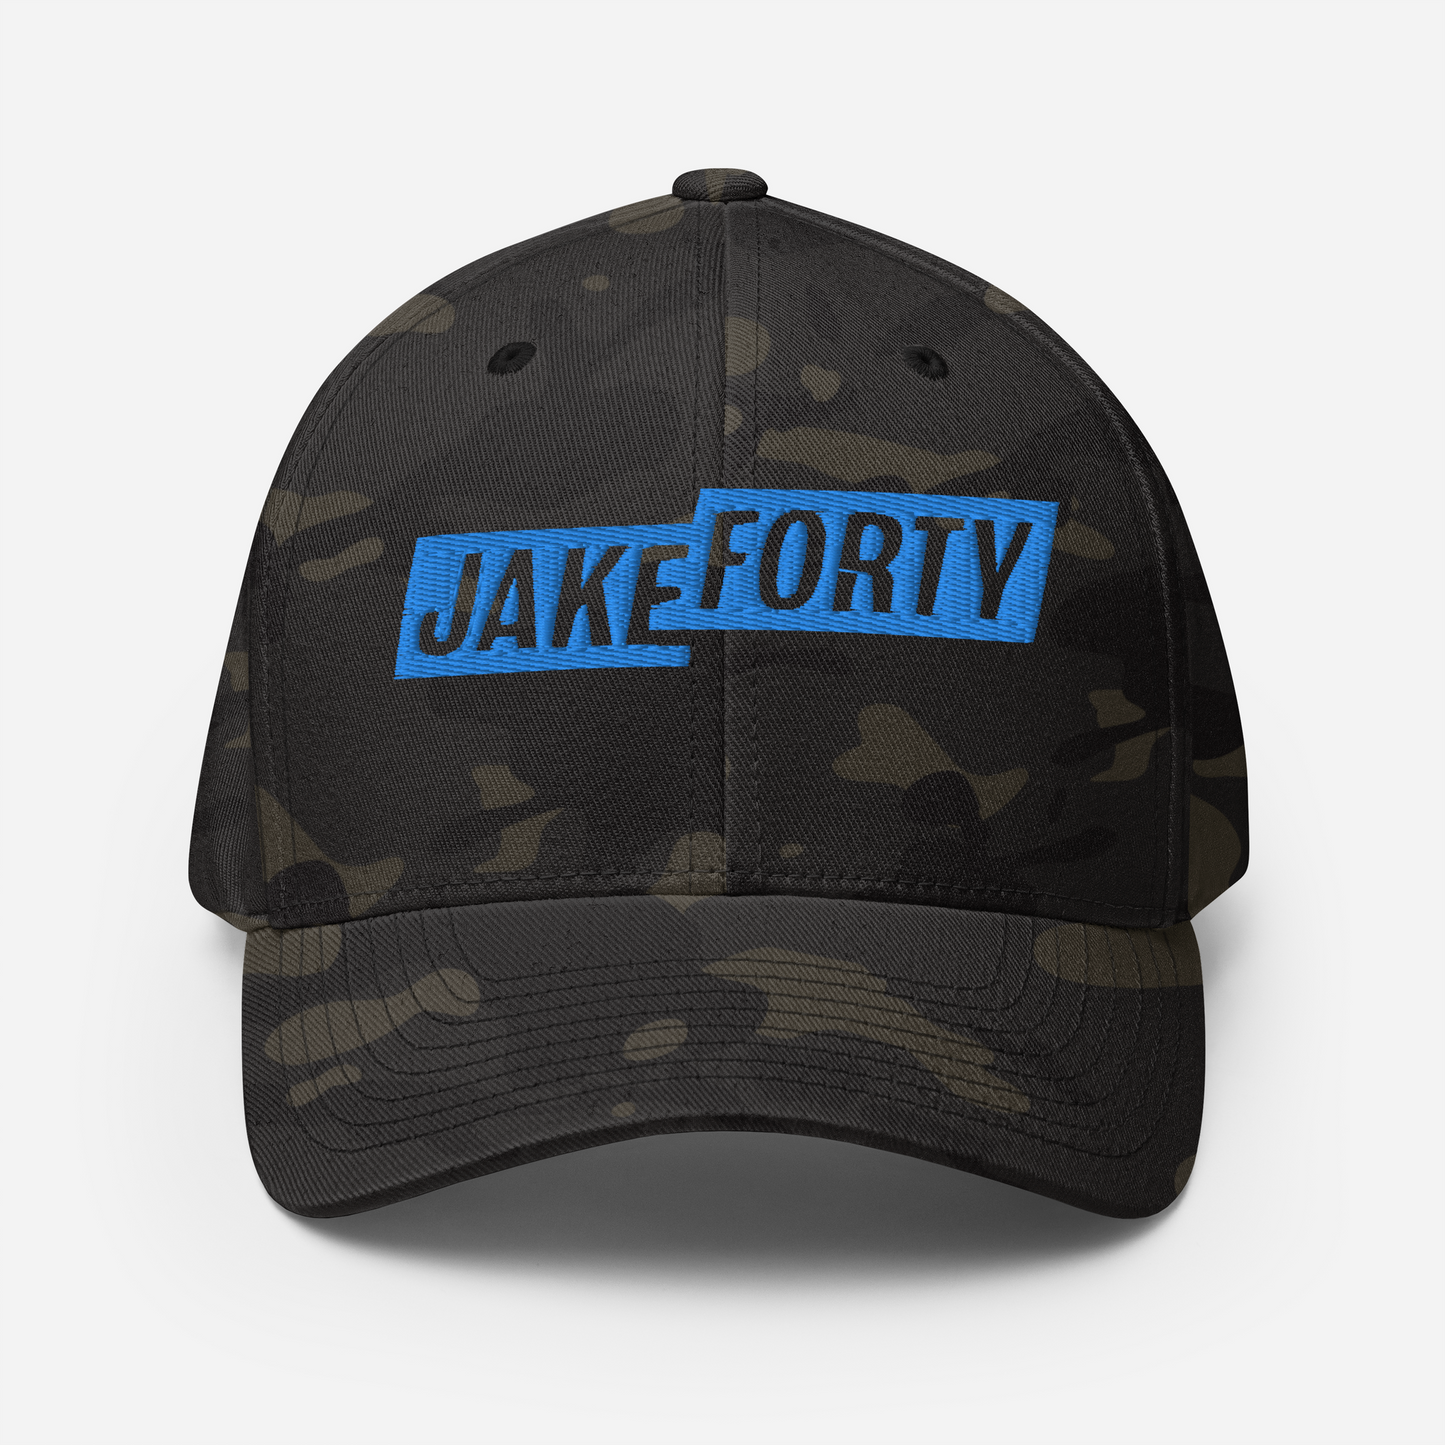 Jake Forty Flex Fit Hat